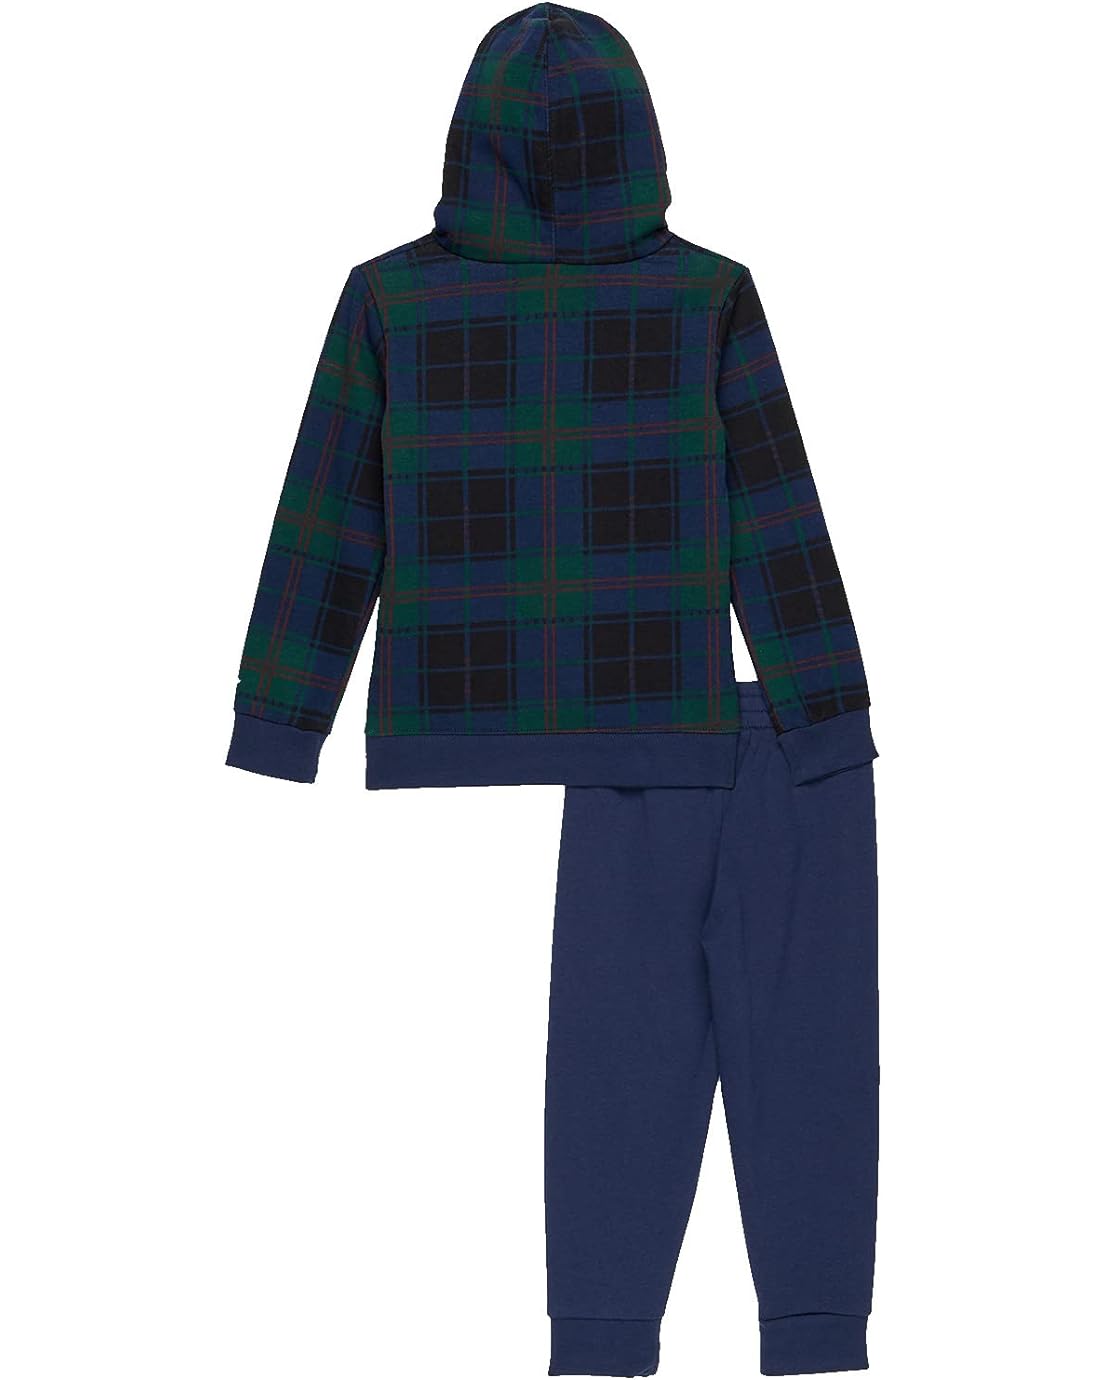  Jordan Kids Essentials Plaid Pullover Set (Toddler)